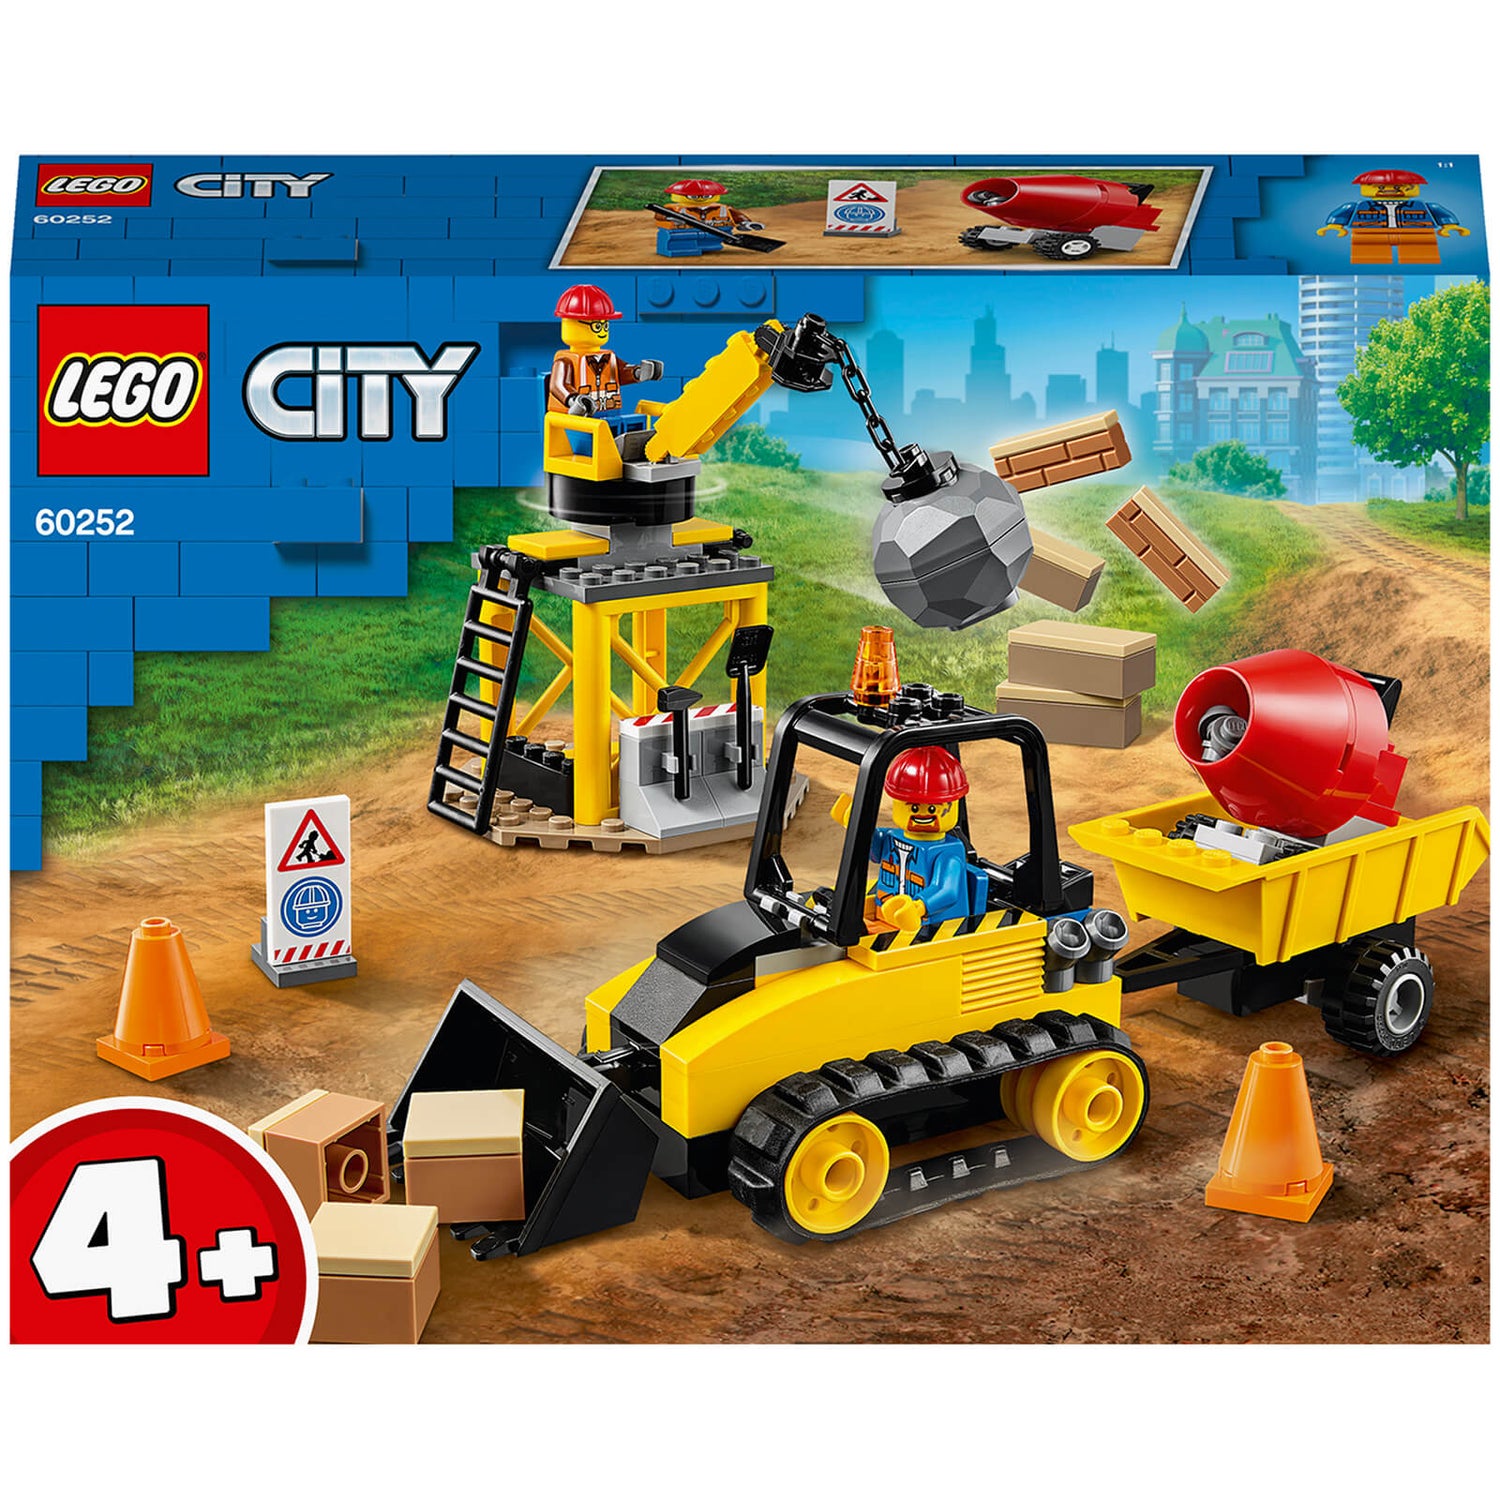 længes efter unlock kradse LEGO City: Great Vehicles Construction Bulldozer Set (60252) Toys - Zavvi US